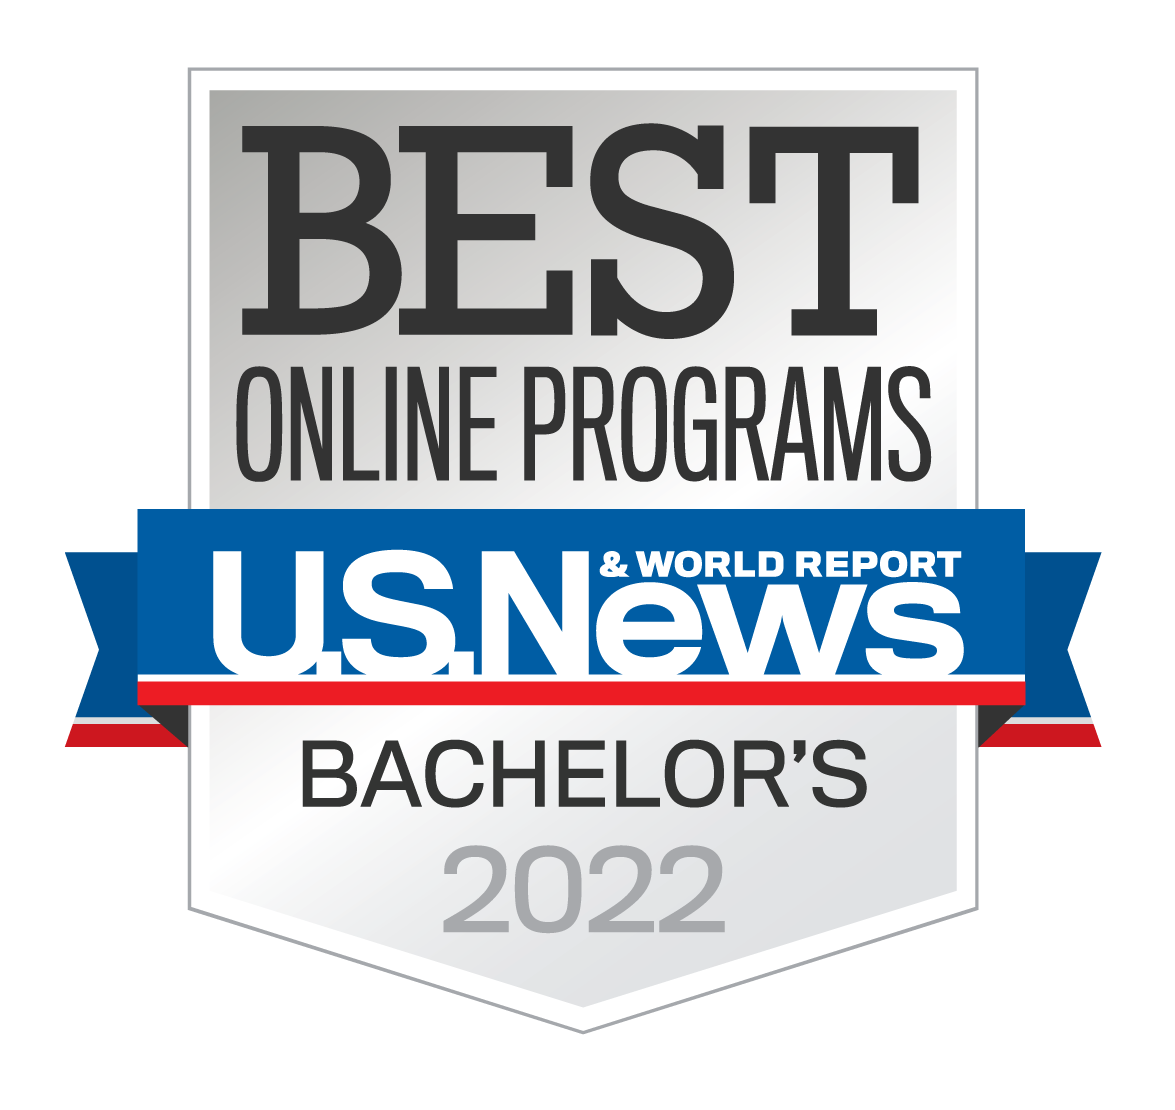 US News Best Online Programs Bachelor's 2022